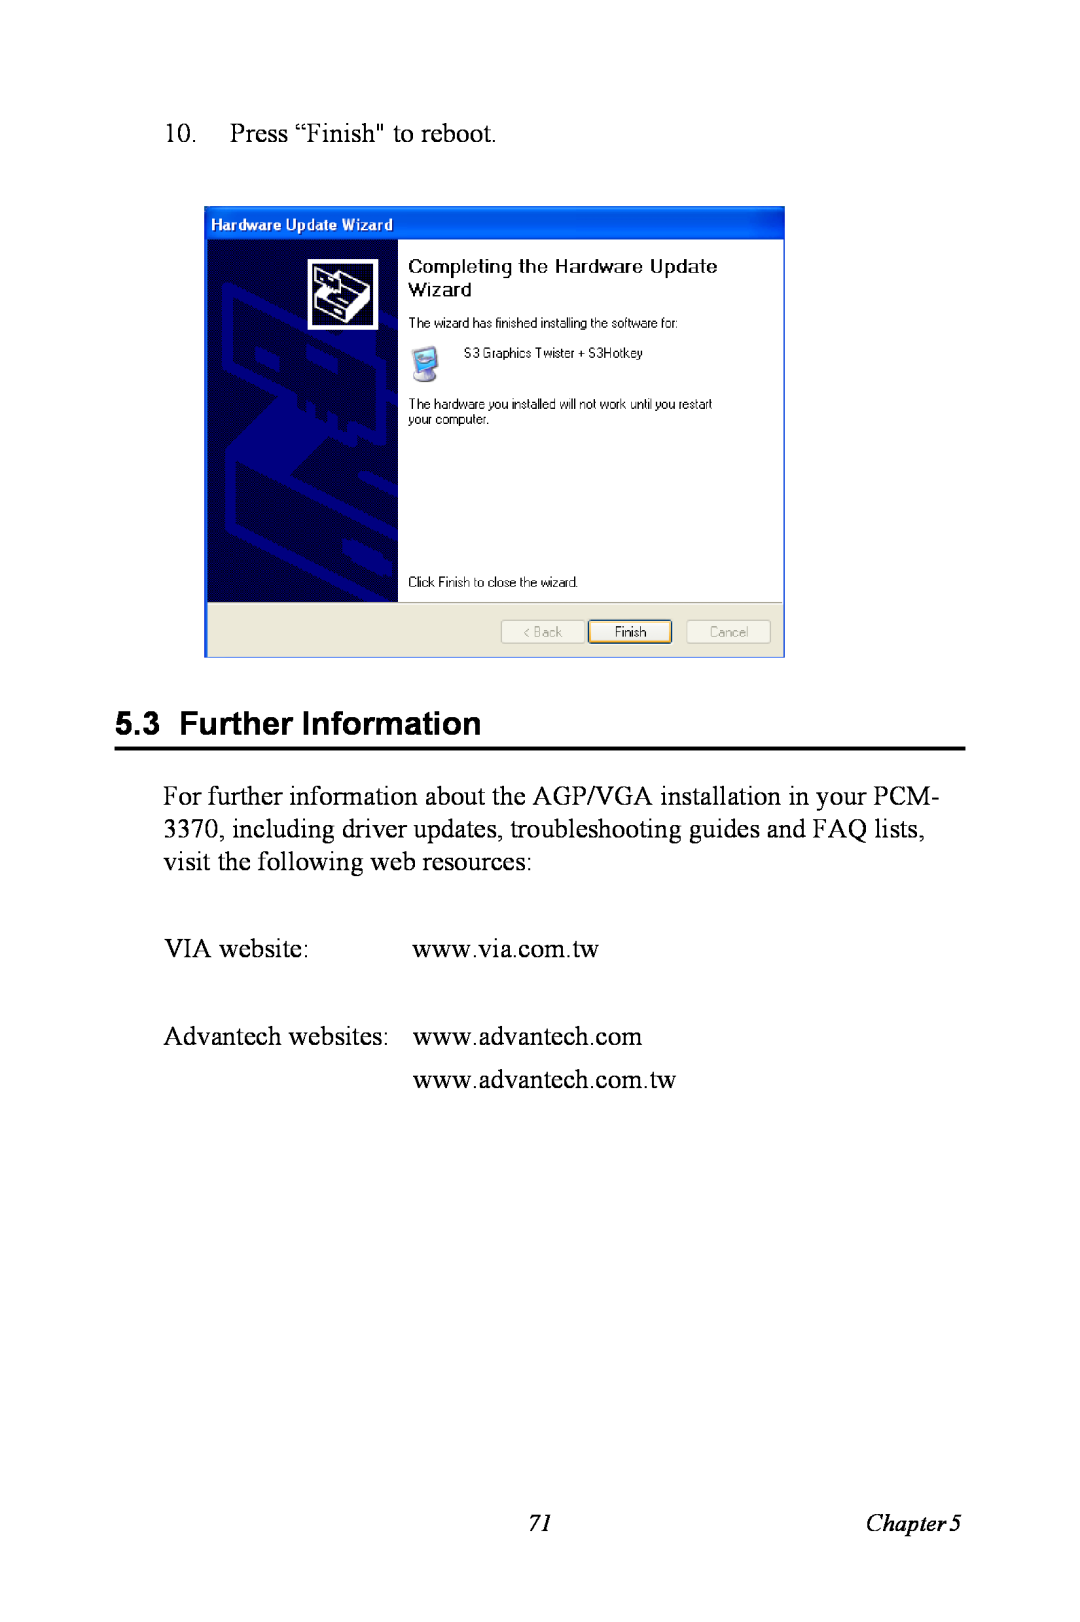 Intel PCM-3370 user manual Further Information, Press “Finish to reboot, VIA website 